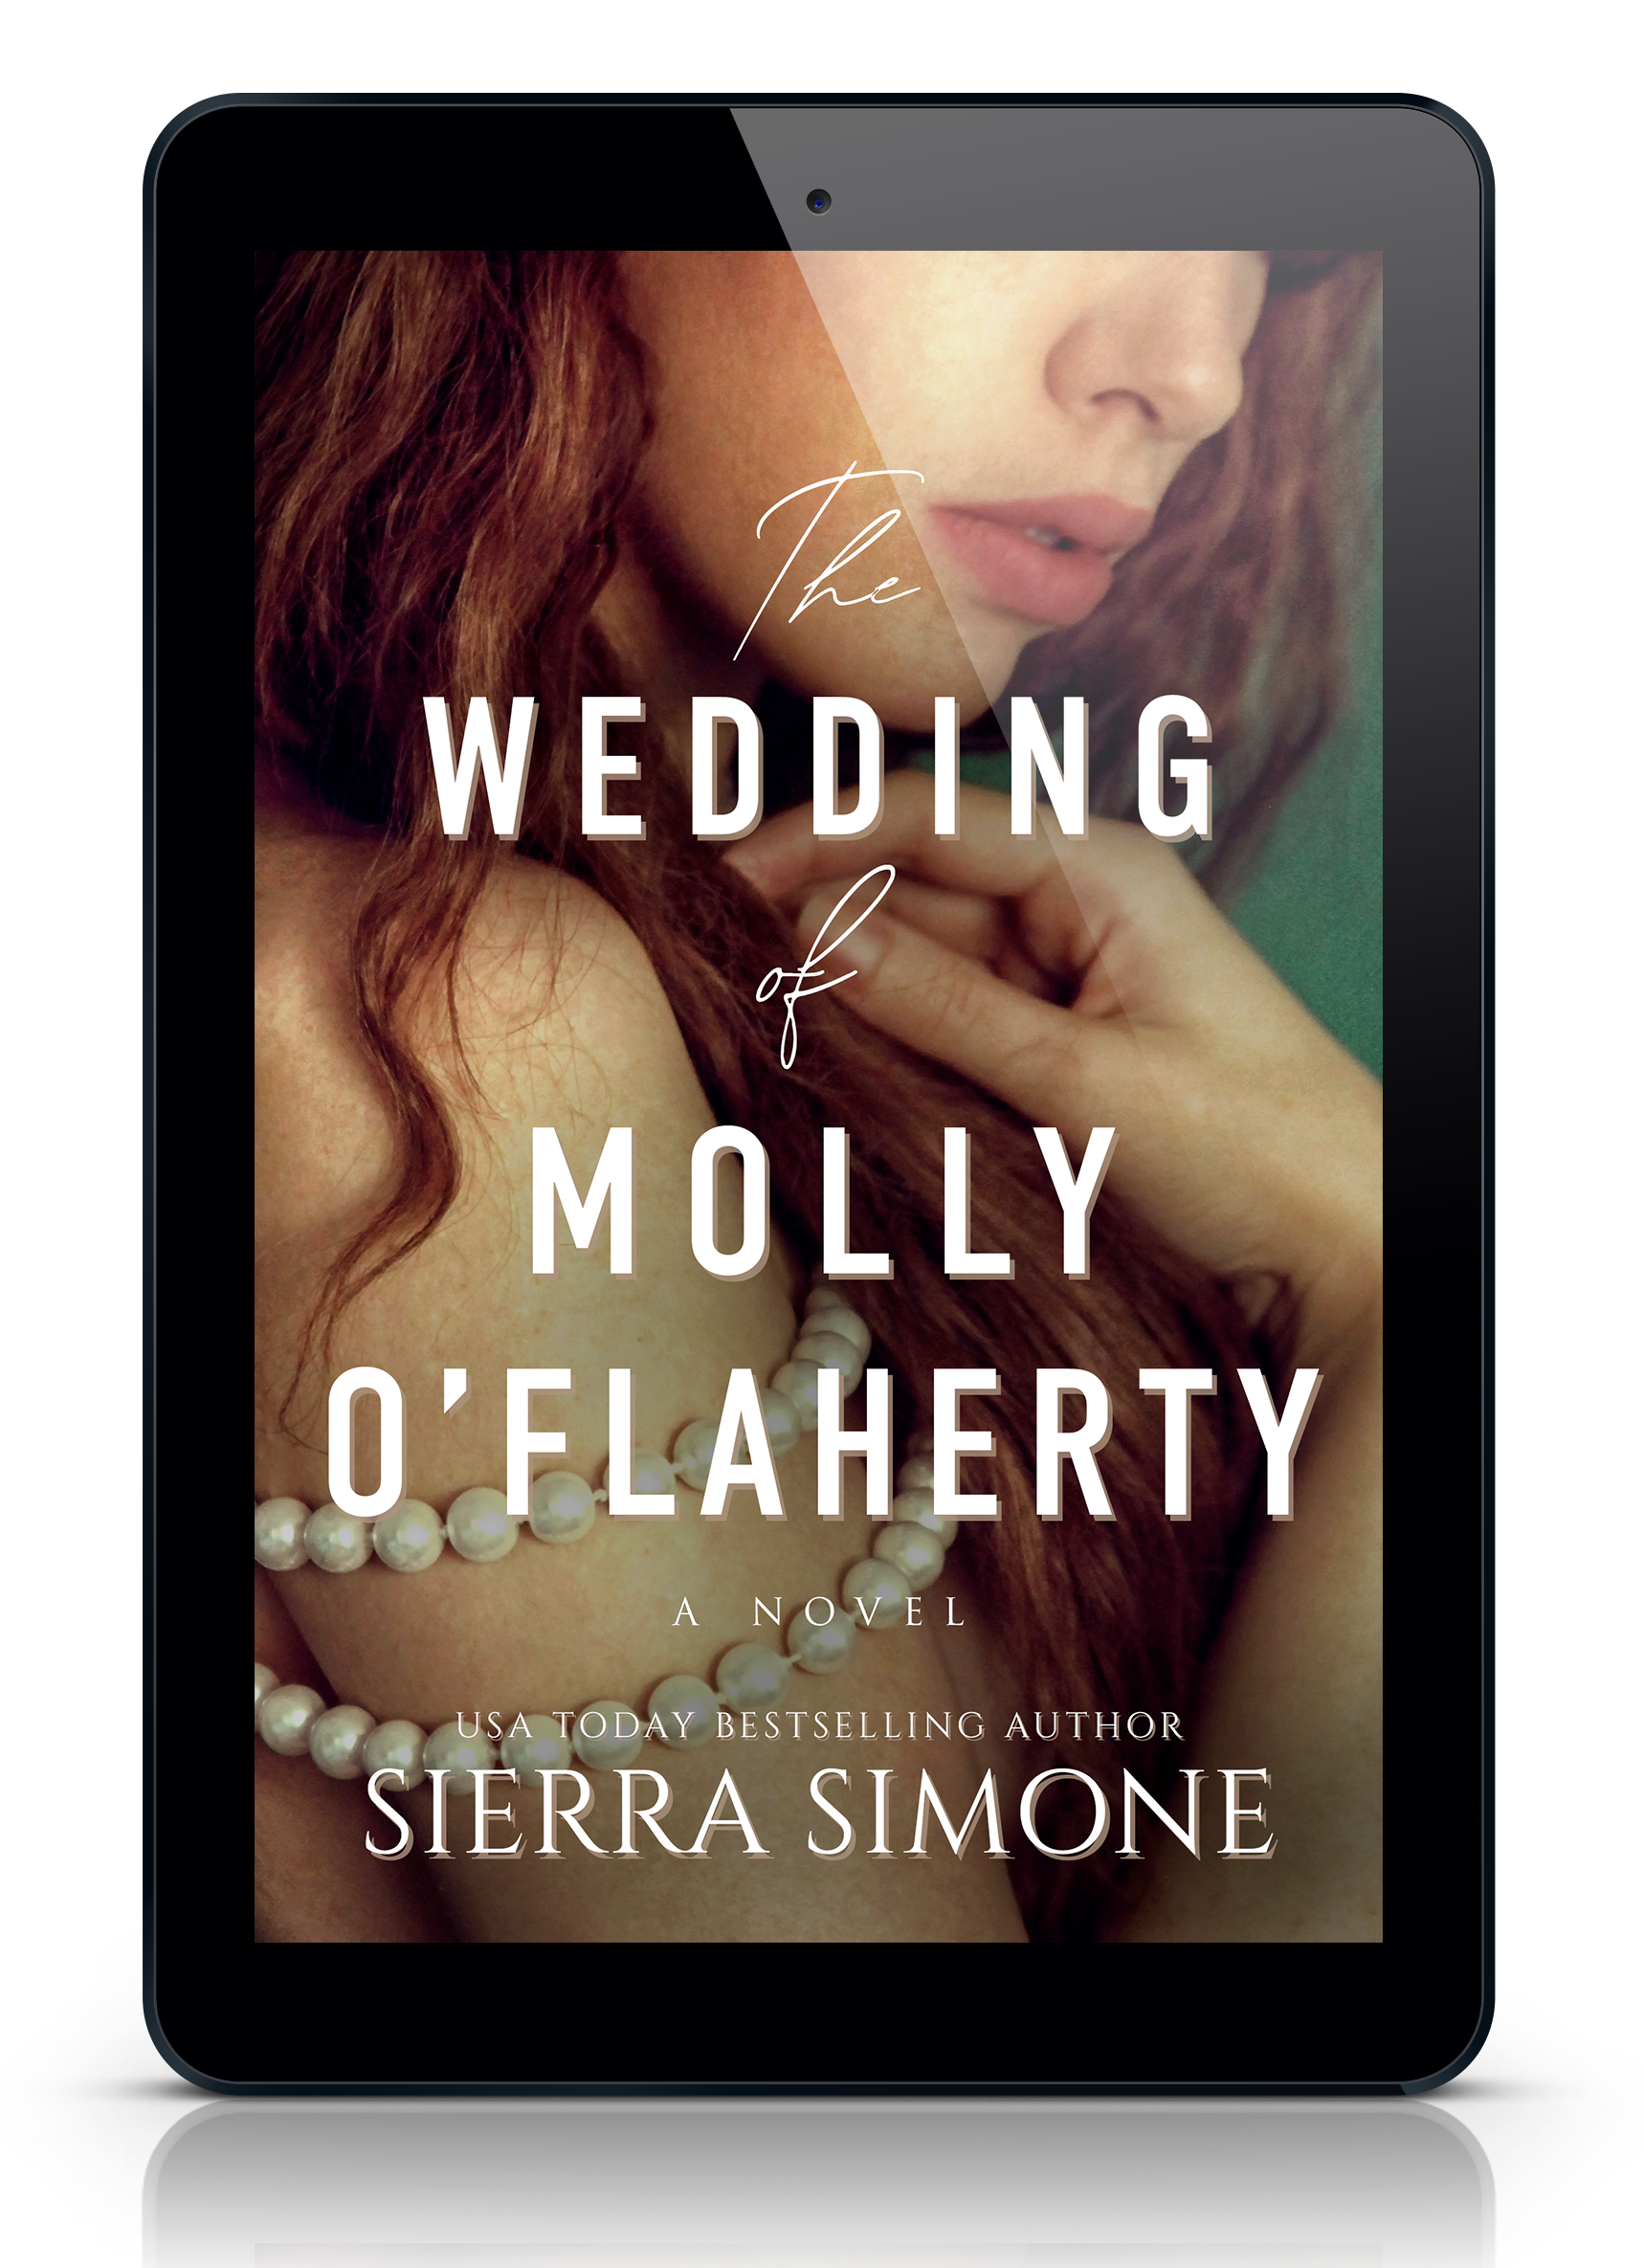 Wedding of Molly o'flaherty tablet mockup.png